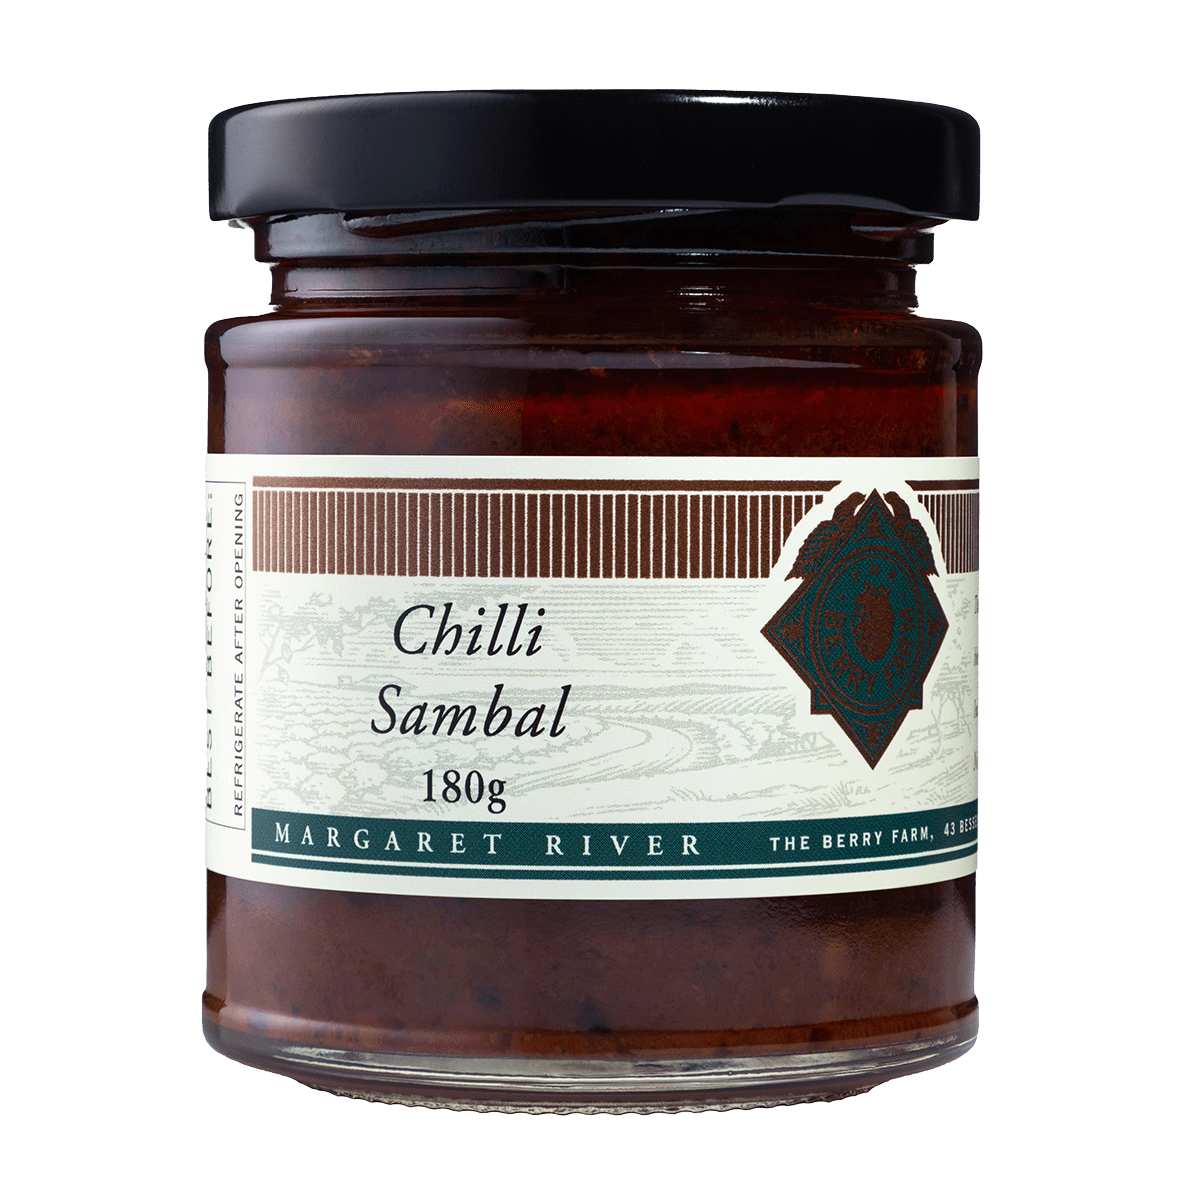 A jar of Chilli Sambal Paste